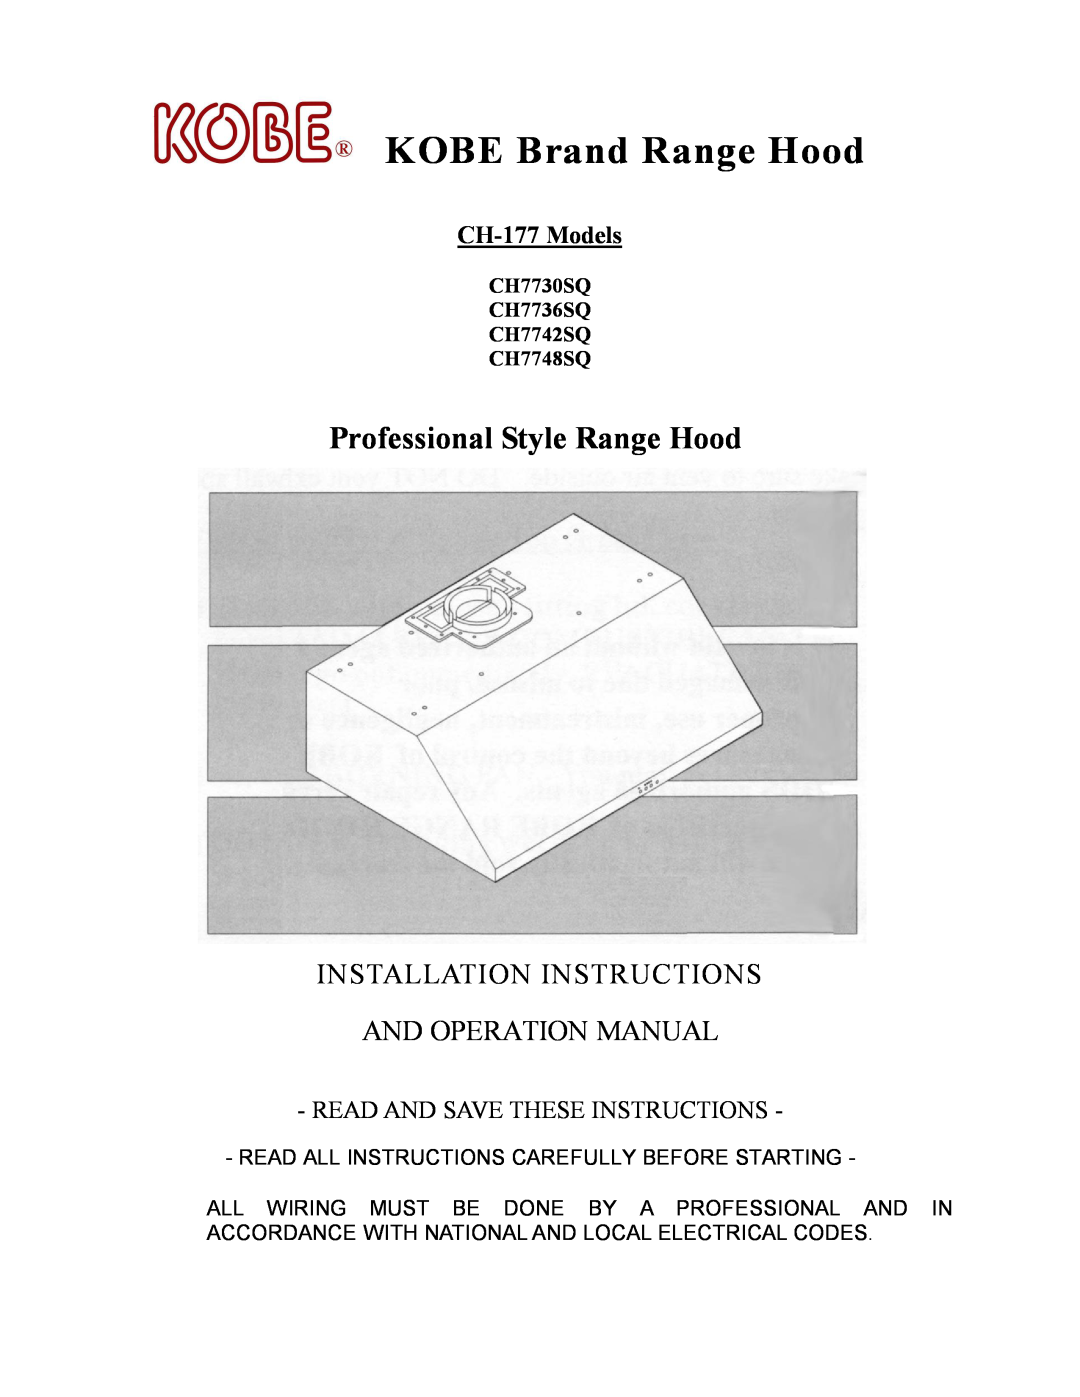 Kobe Range Hoods CH7730SQ, CH7736SQ, CH7748SQ manual CH-177 Models, Read And Save These Instructions, KOBE Brand Range Hood 